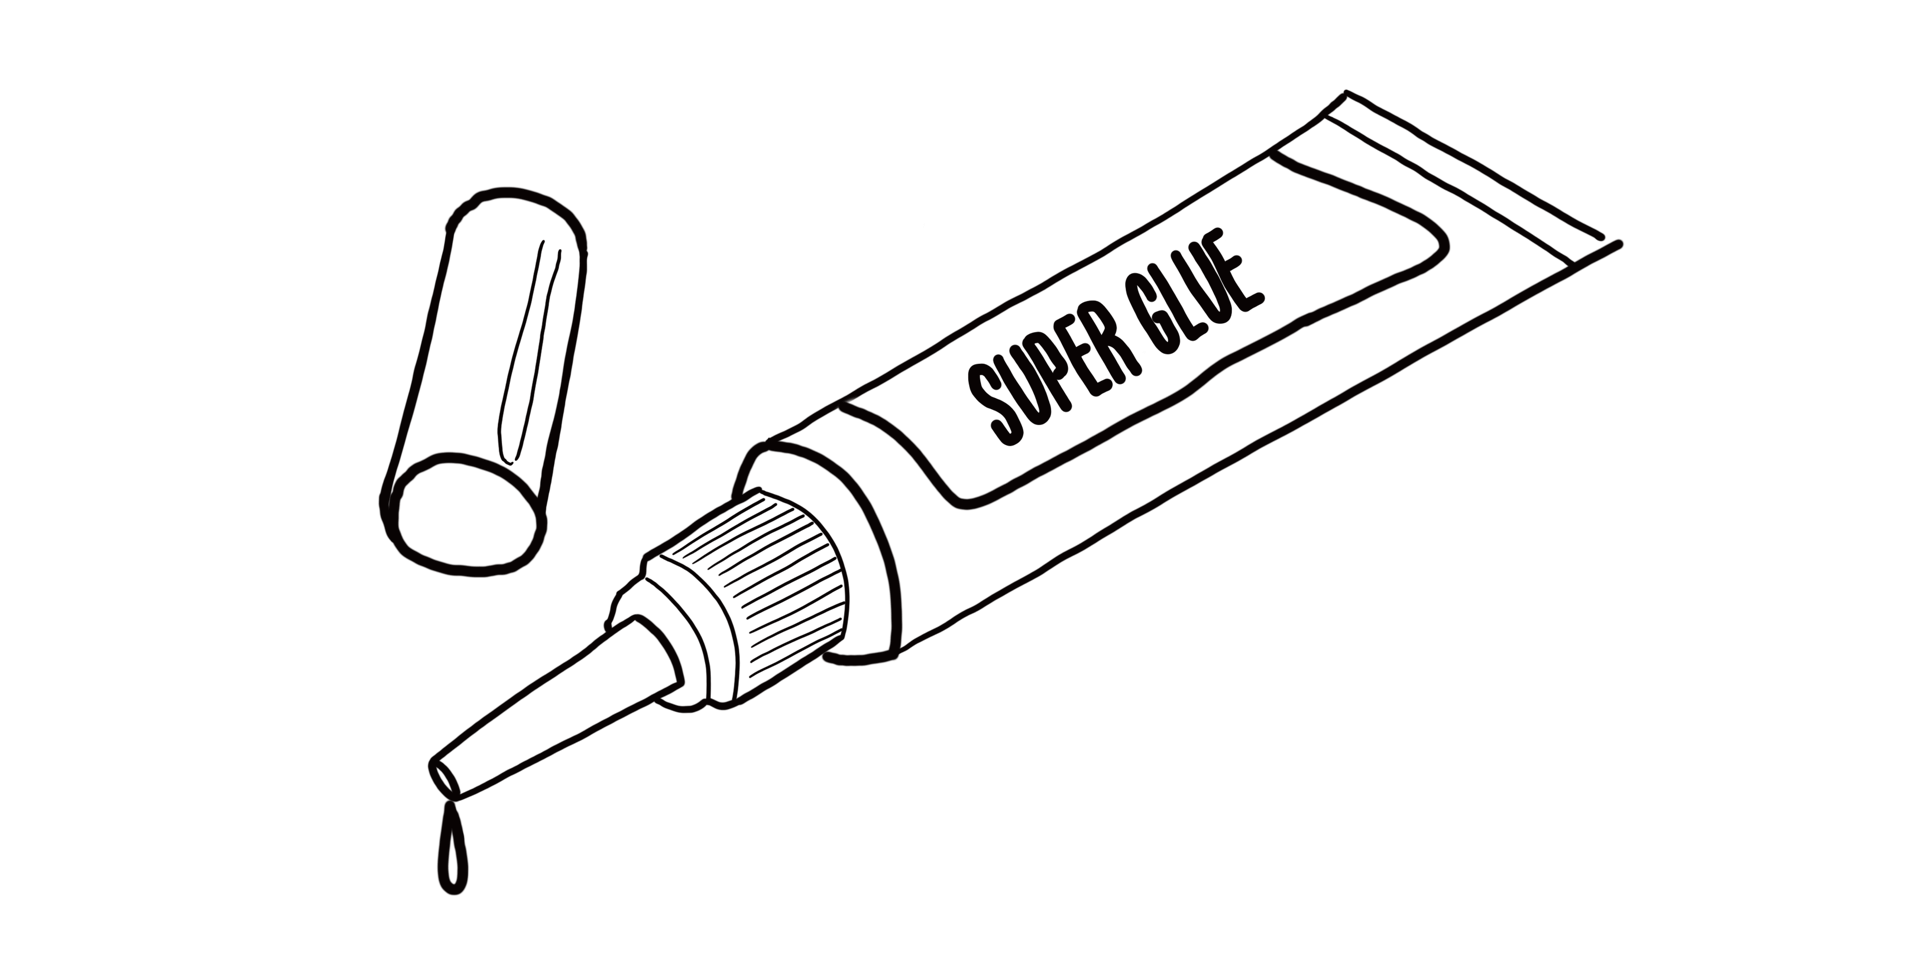  Illustration of glue